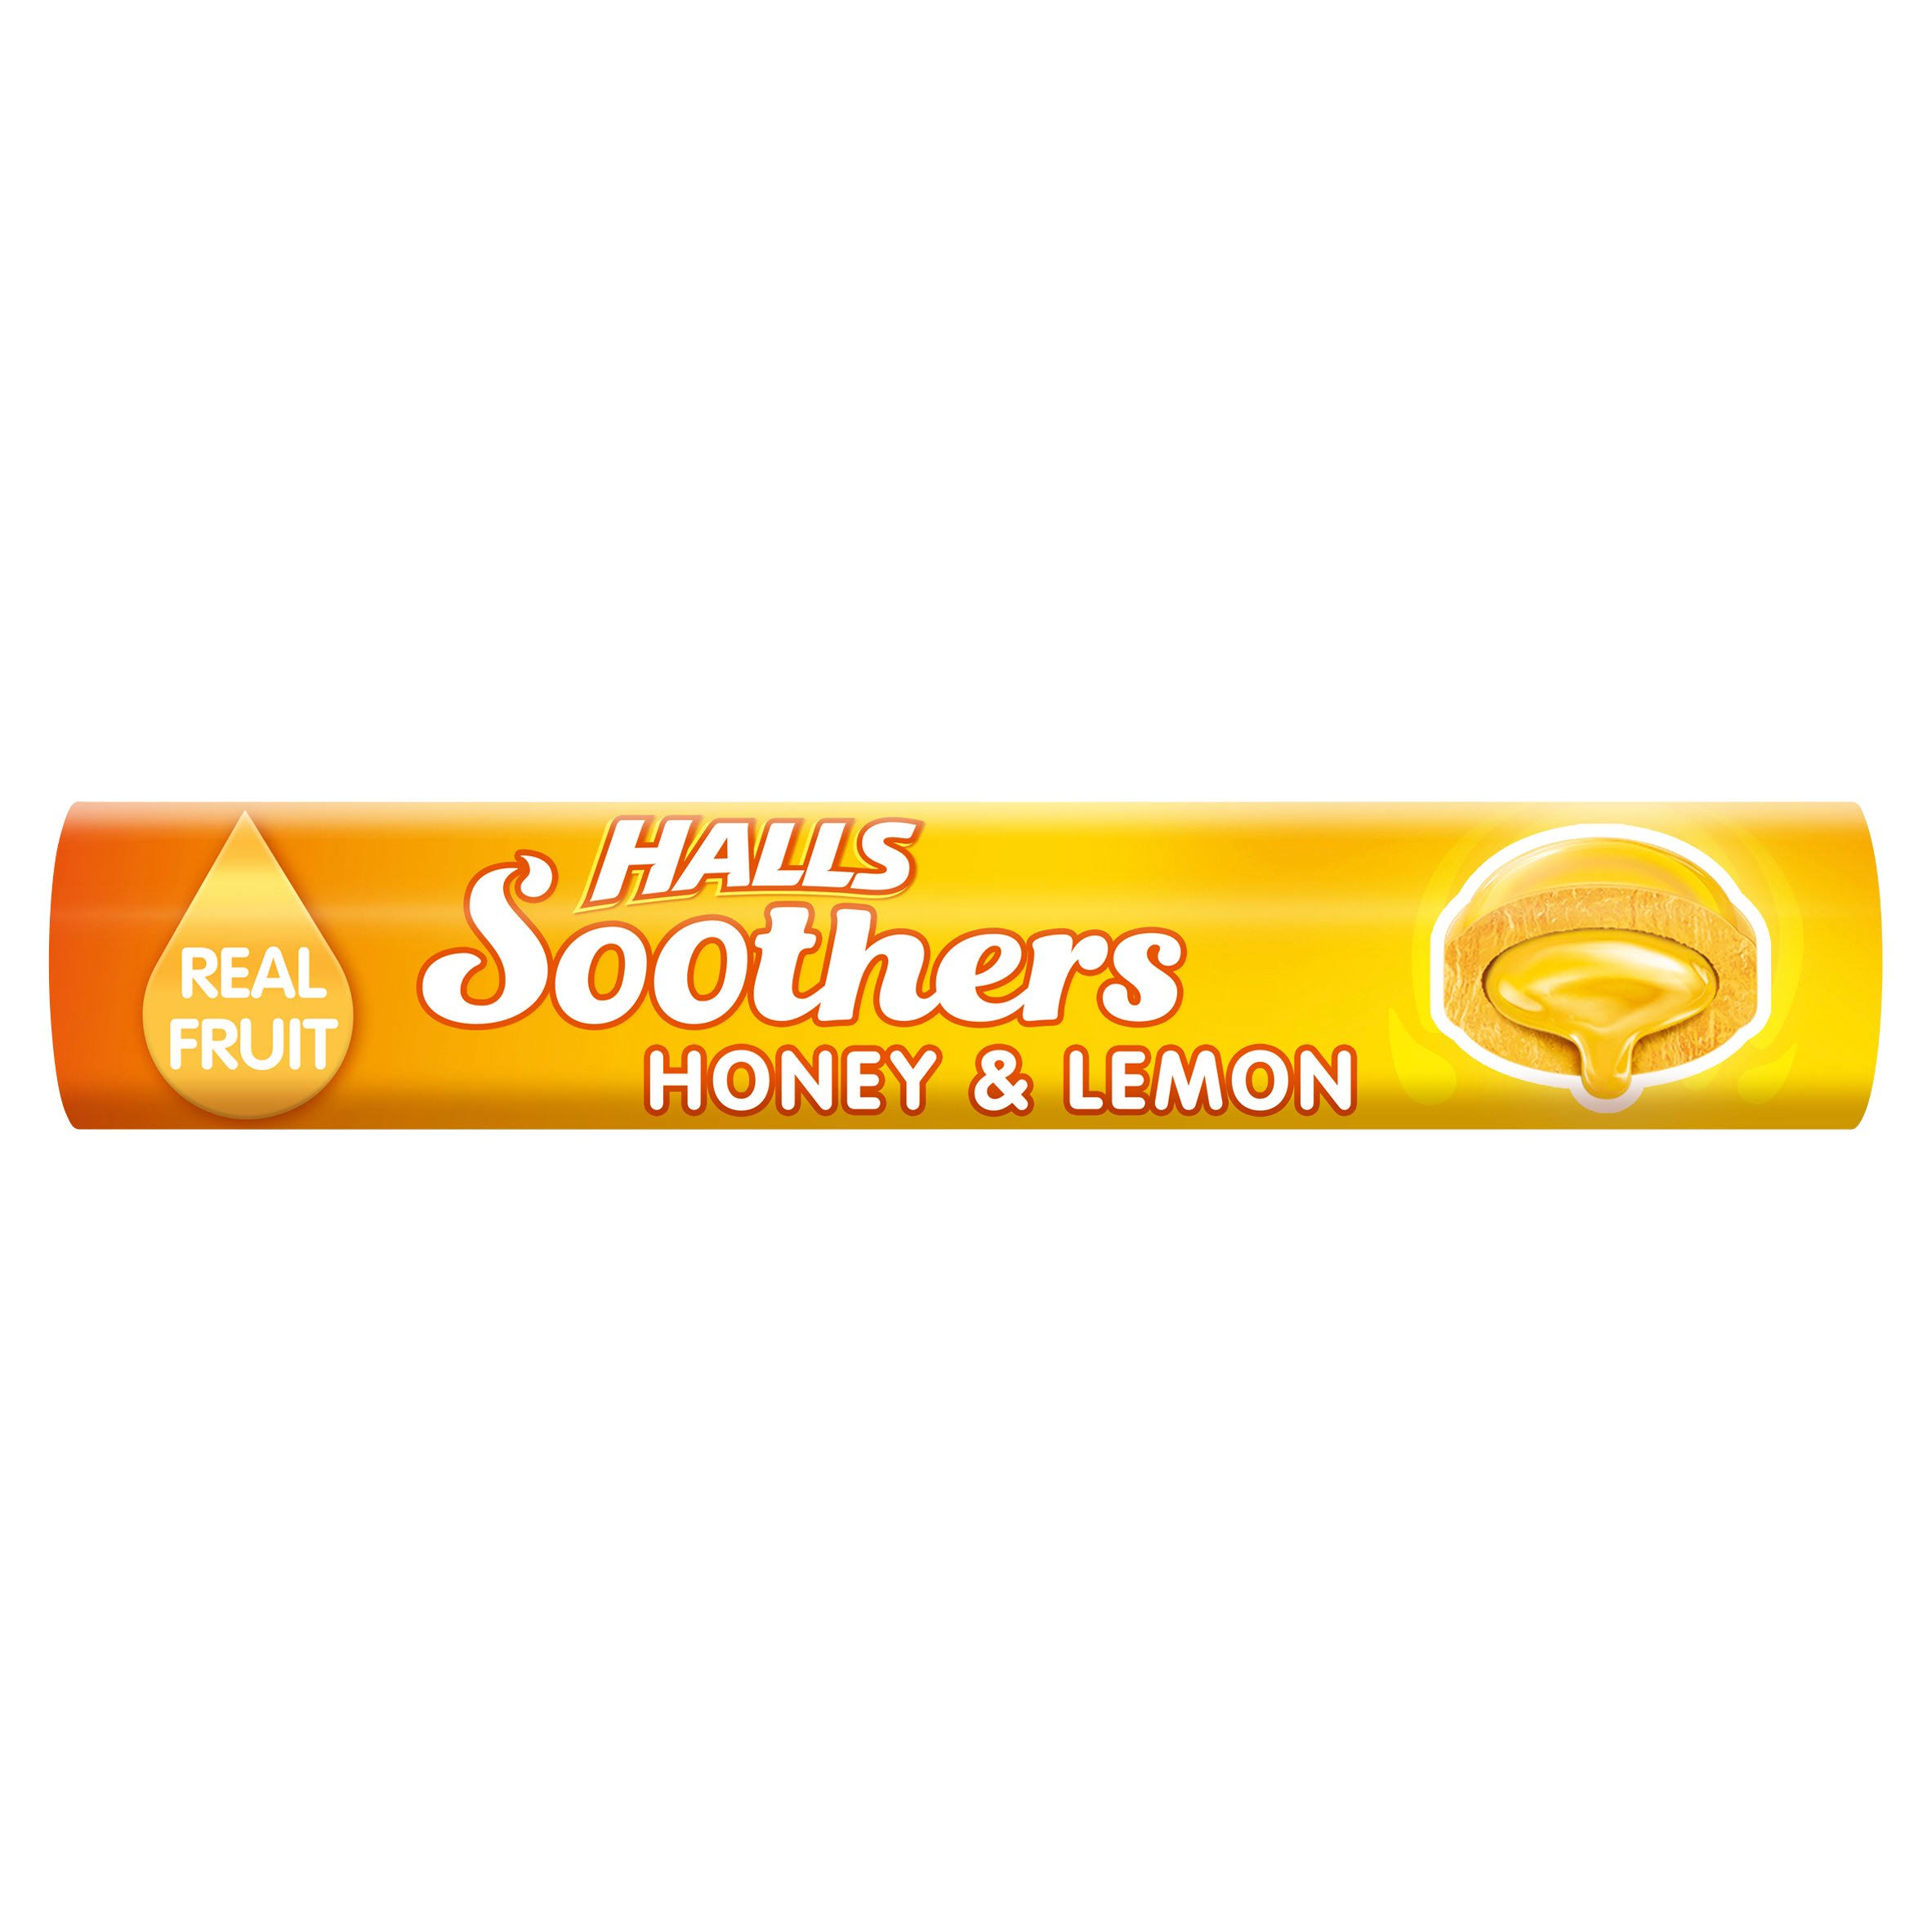 Halls Soothers - Honey & Lemon, 45g